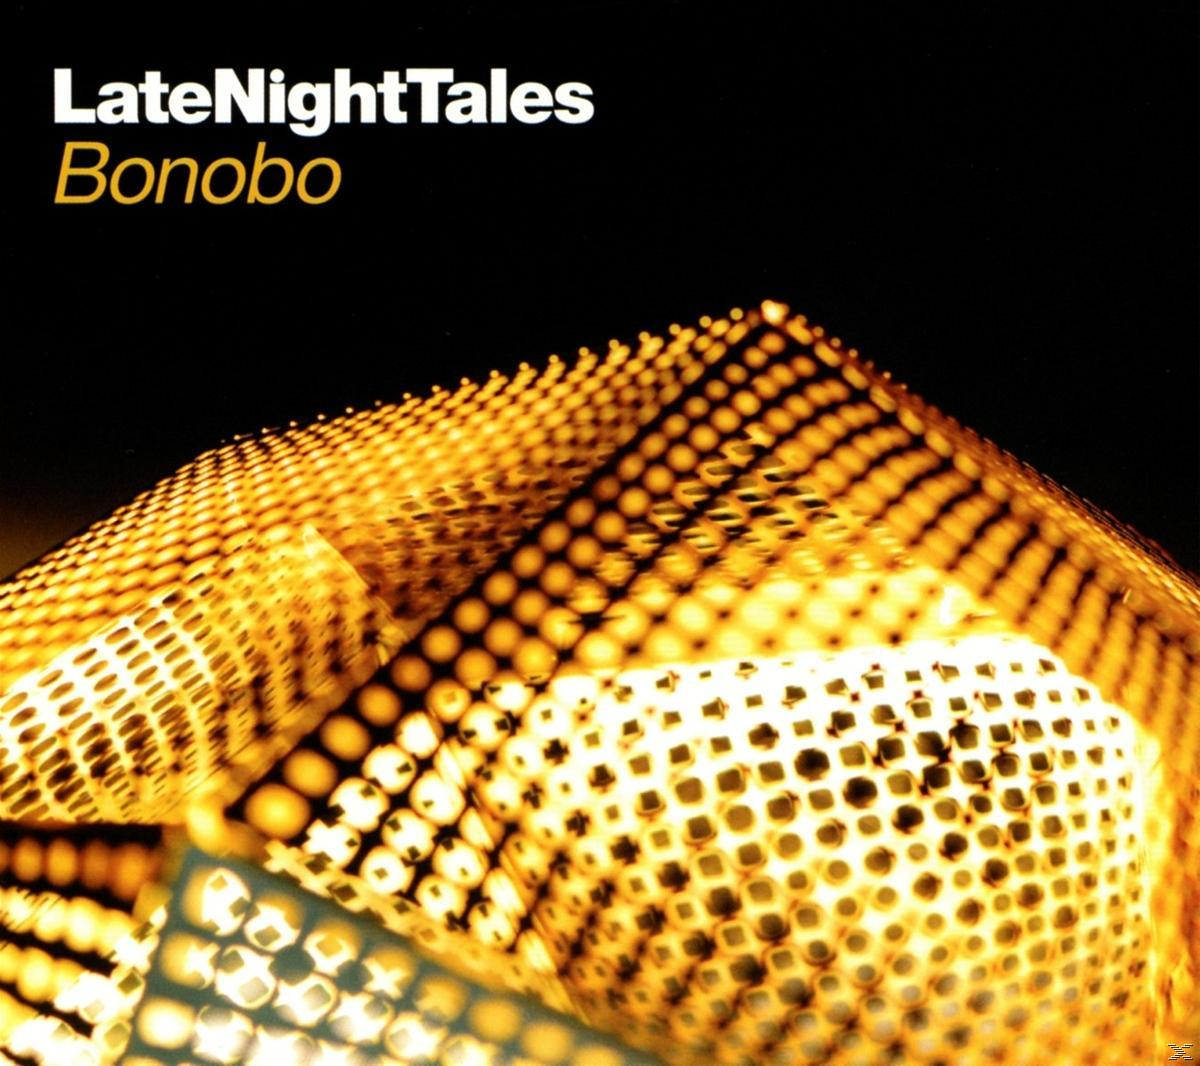 Bonobo, VARIOUS - (CD) Night Tales - Late